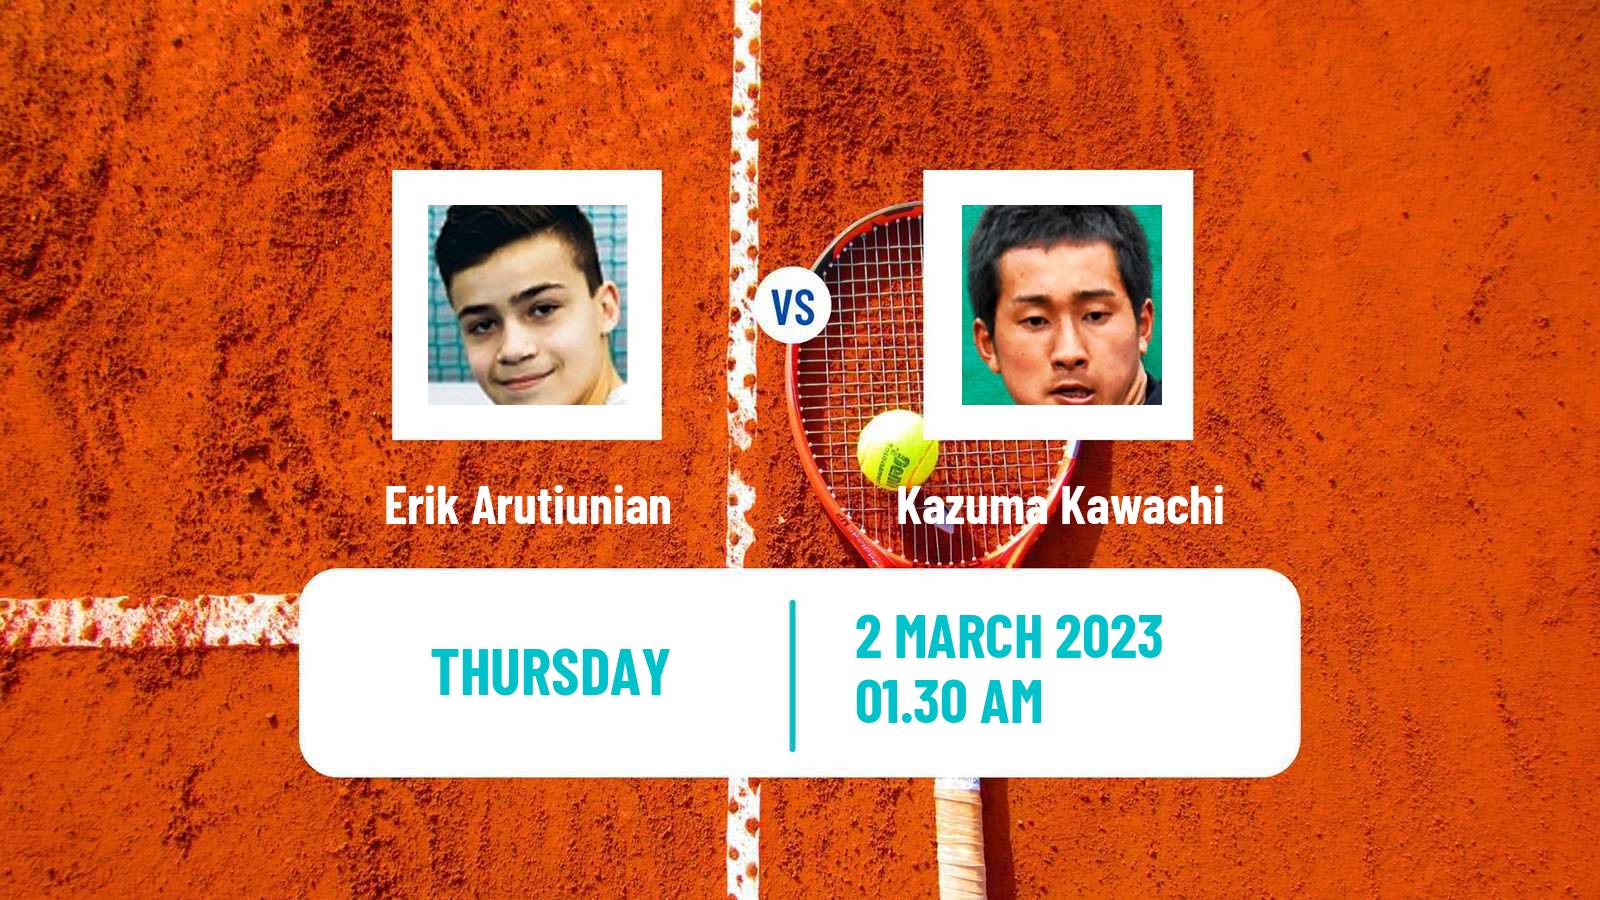 Tennis ITF Tournaments Erik Arutiunian - Kazuma Kawachi